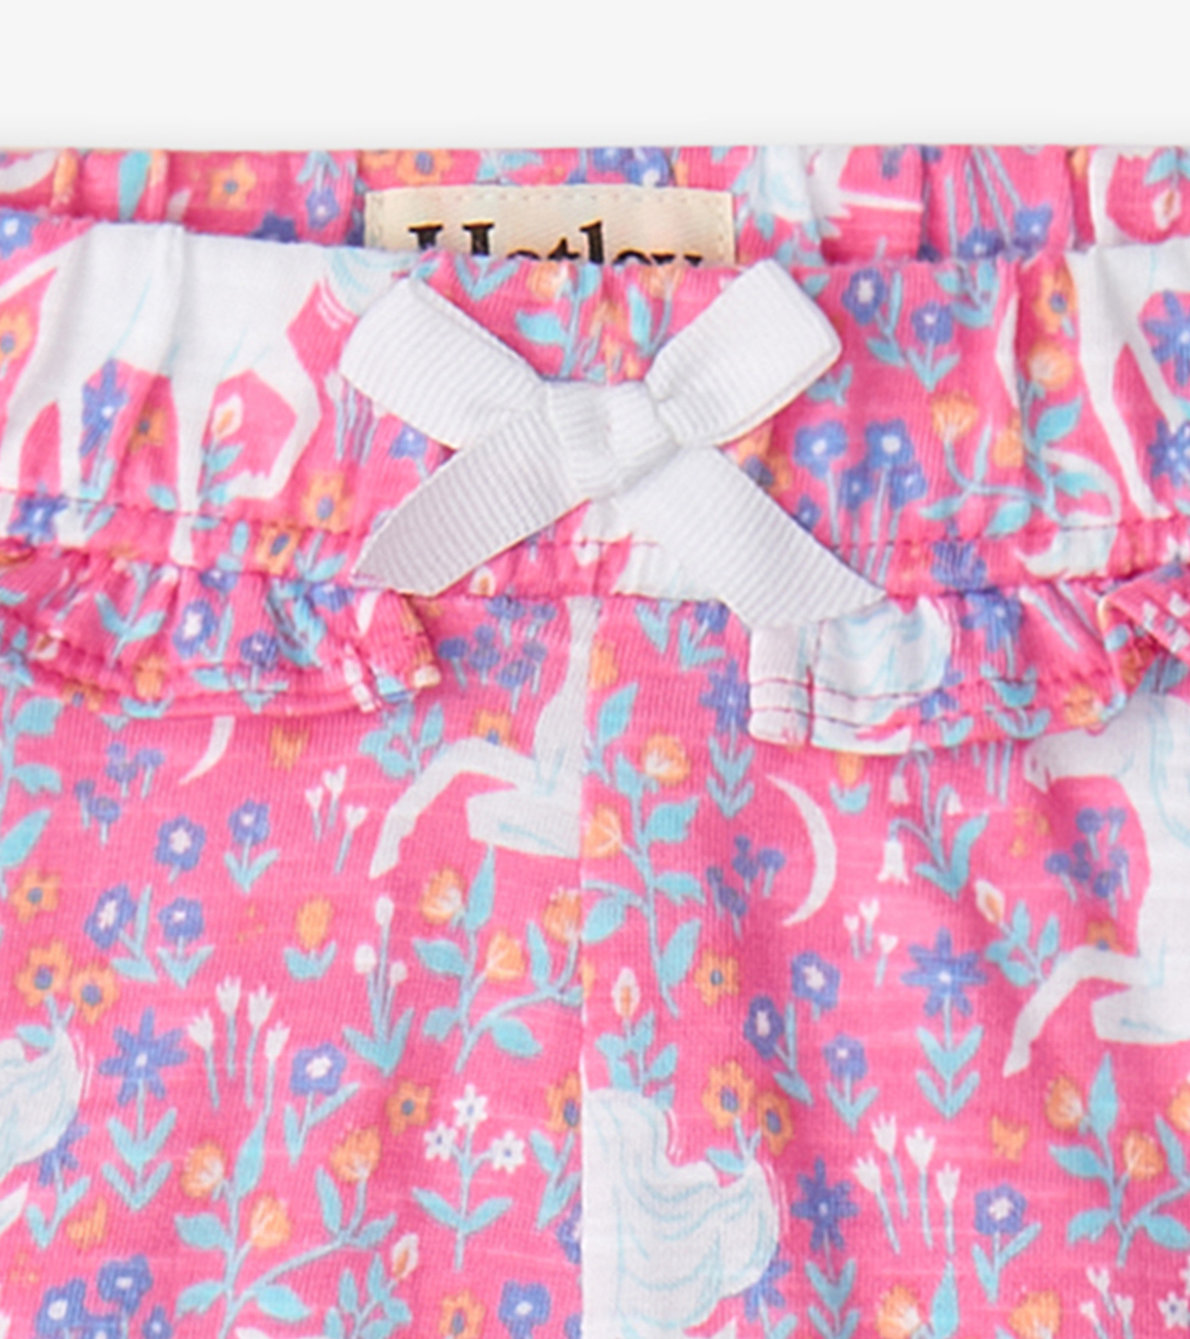 View larger image of Baby & Toddler Girls Unicorn Garden Ruffle Shorts